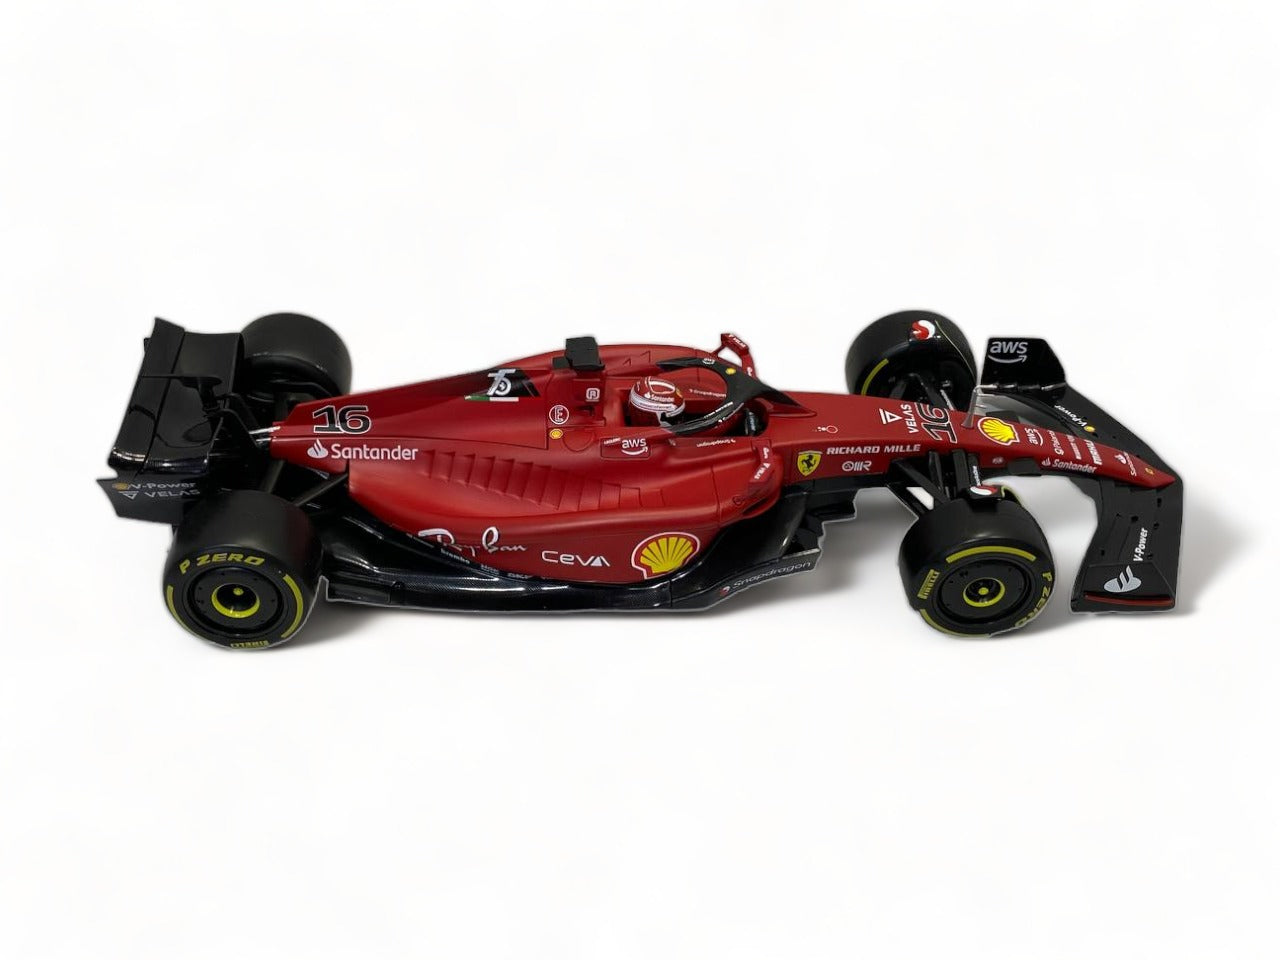 1/18 Bburago Ferrari F1-75 C. Leclerc #16 Red model car|Sold in Dturman.com Dubai UAE.